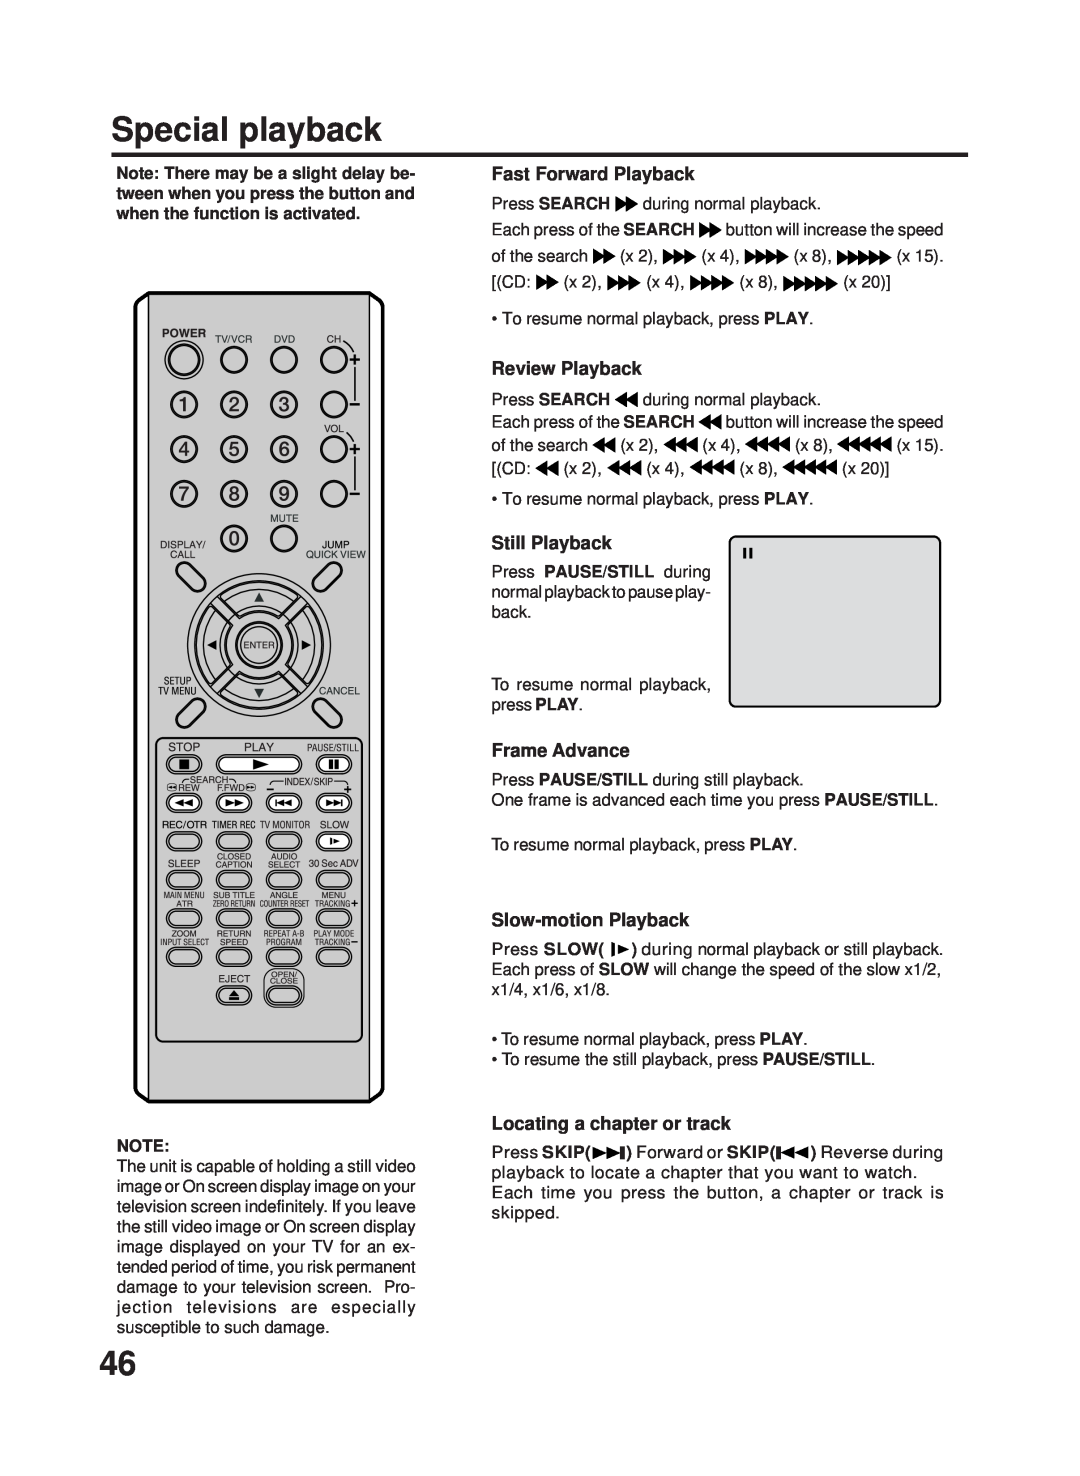 RCA 27F500TDV manual Special playback, Fast Forward Playback, Review Playback, Still Playback, Frame Advance 